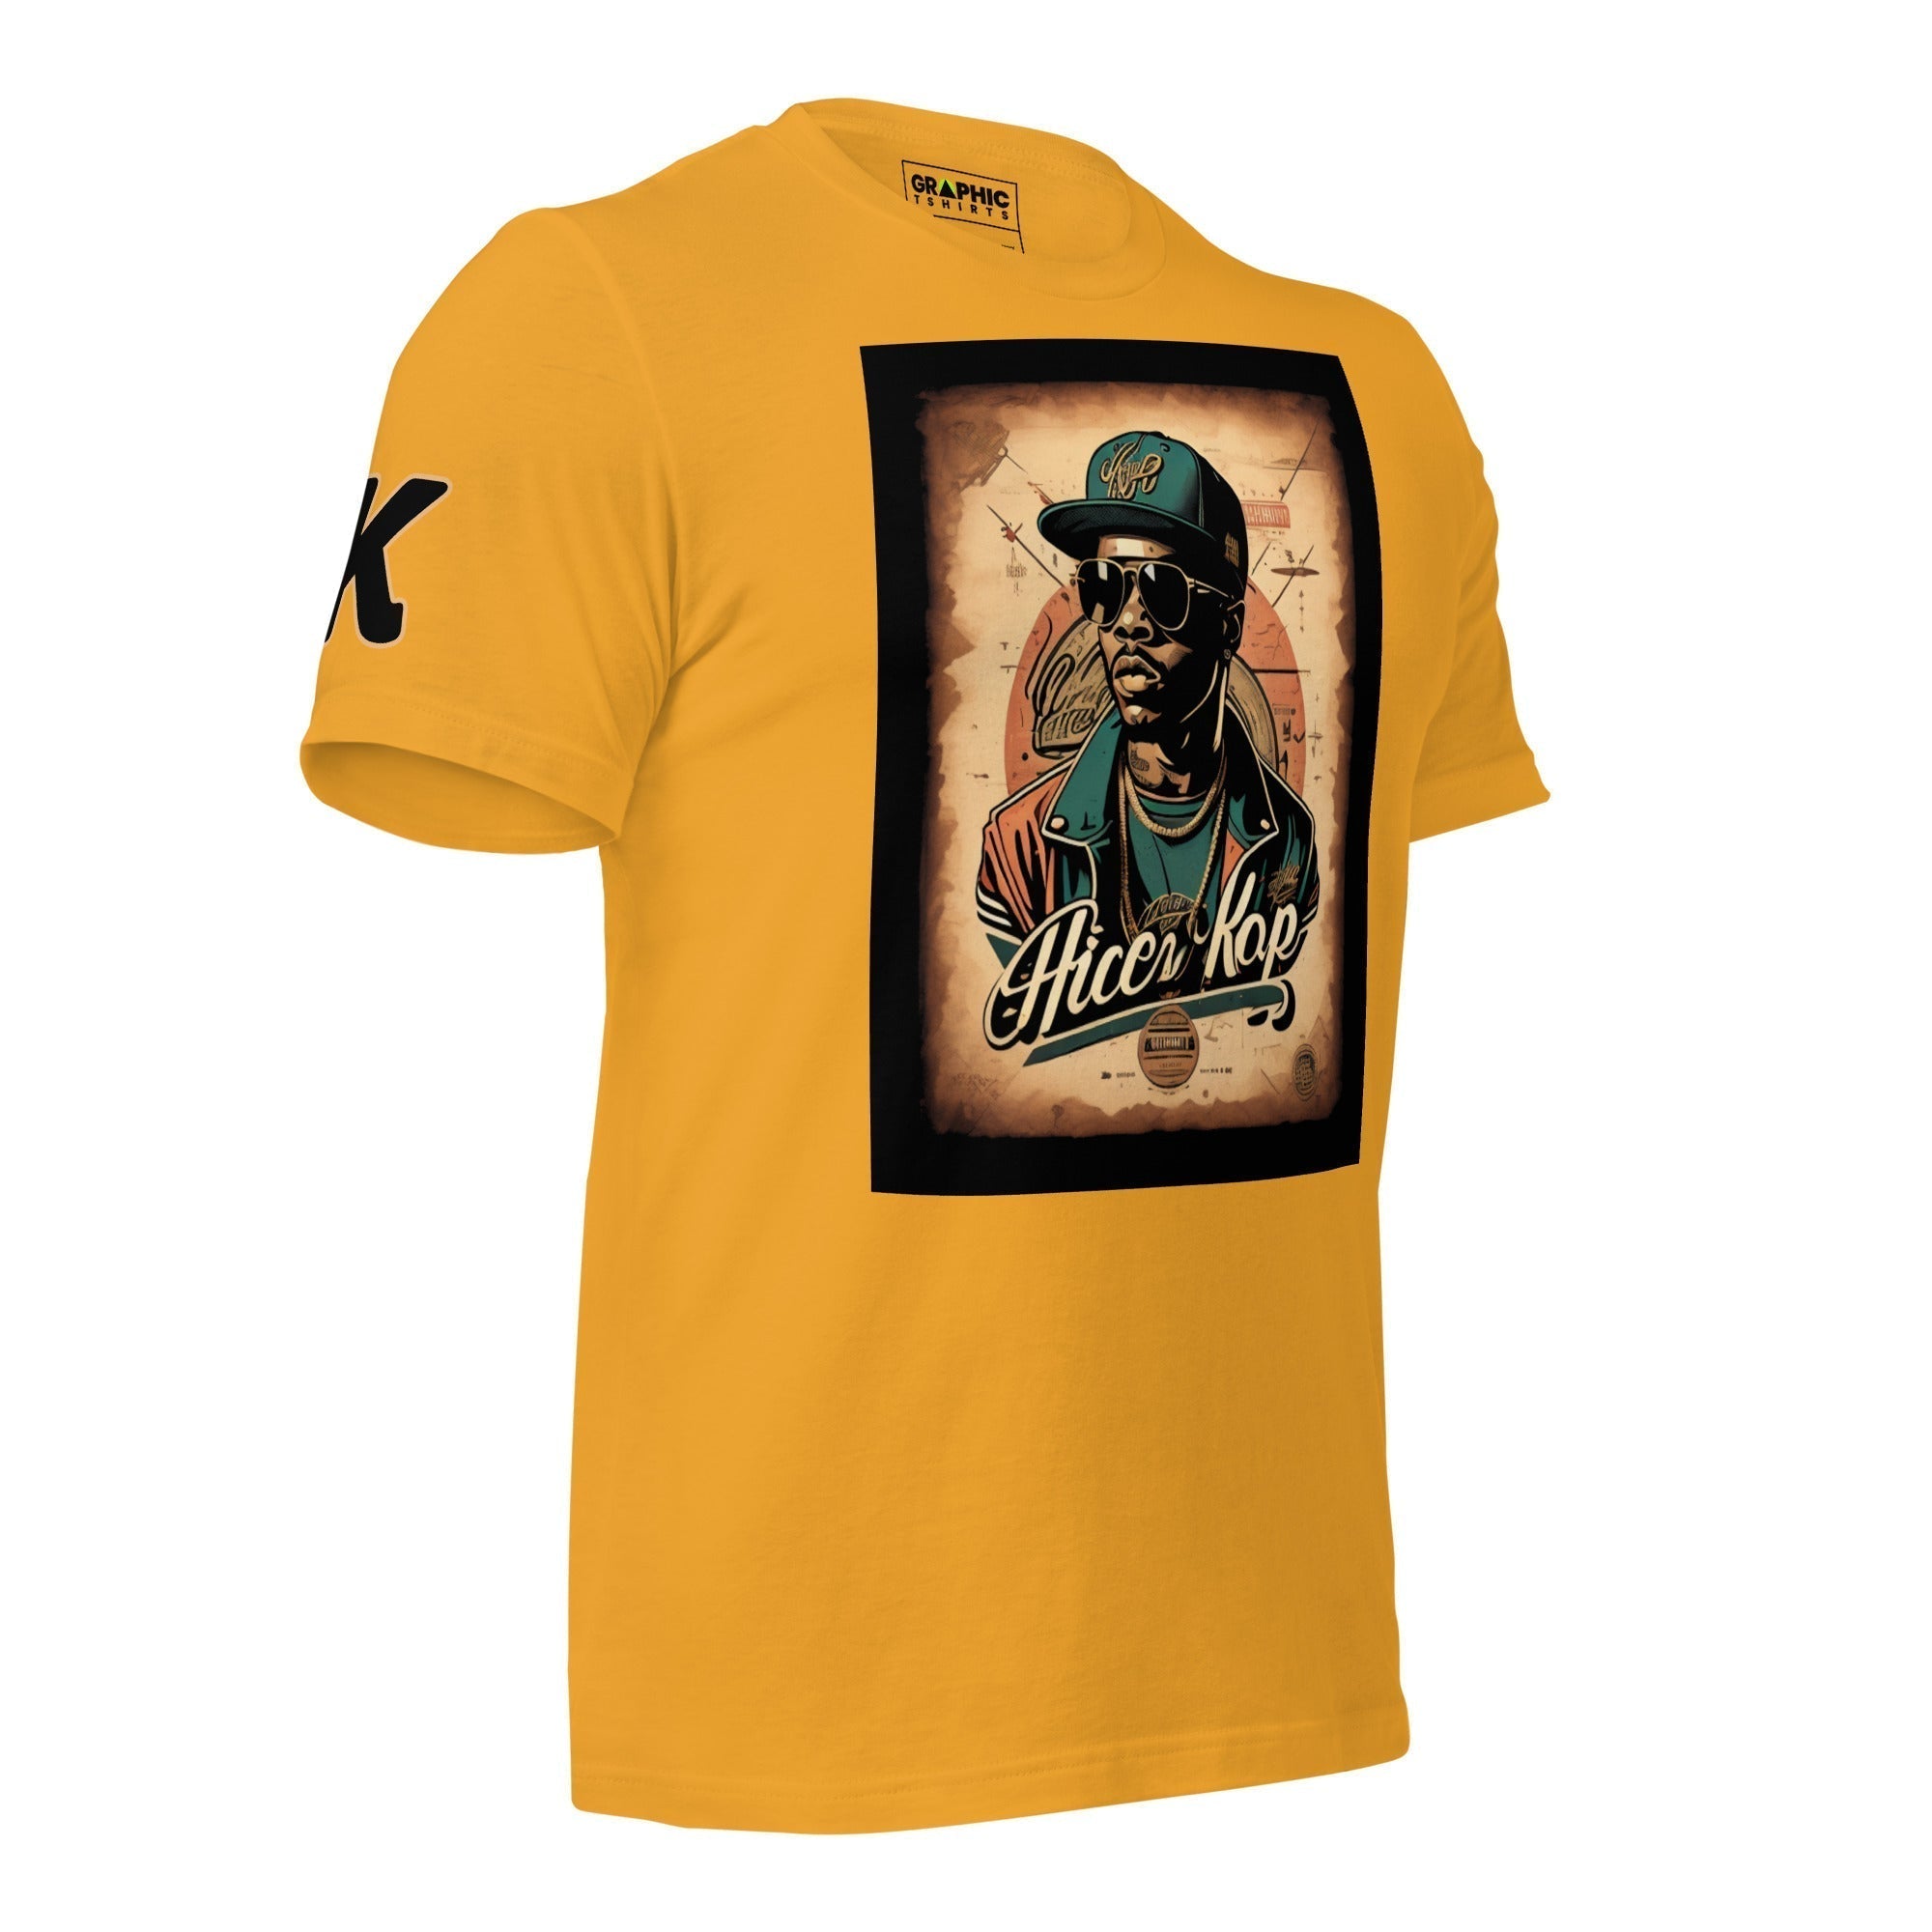 Unisex Crew Neck T-Shirt - Vintage Hip Hop Series v.8 - GRAPHIC T-SHIRTS